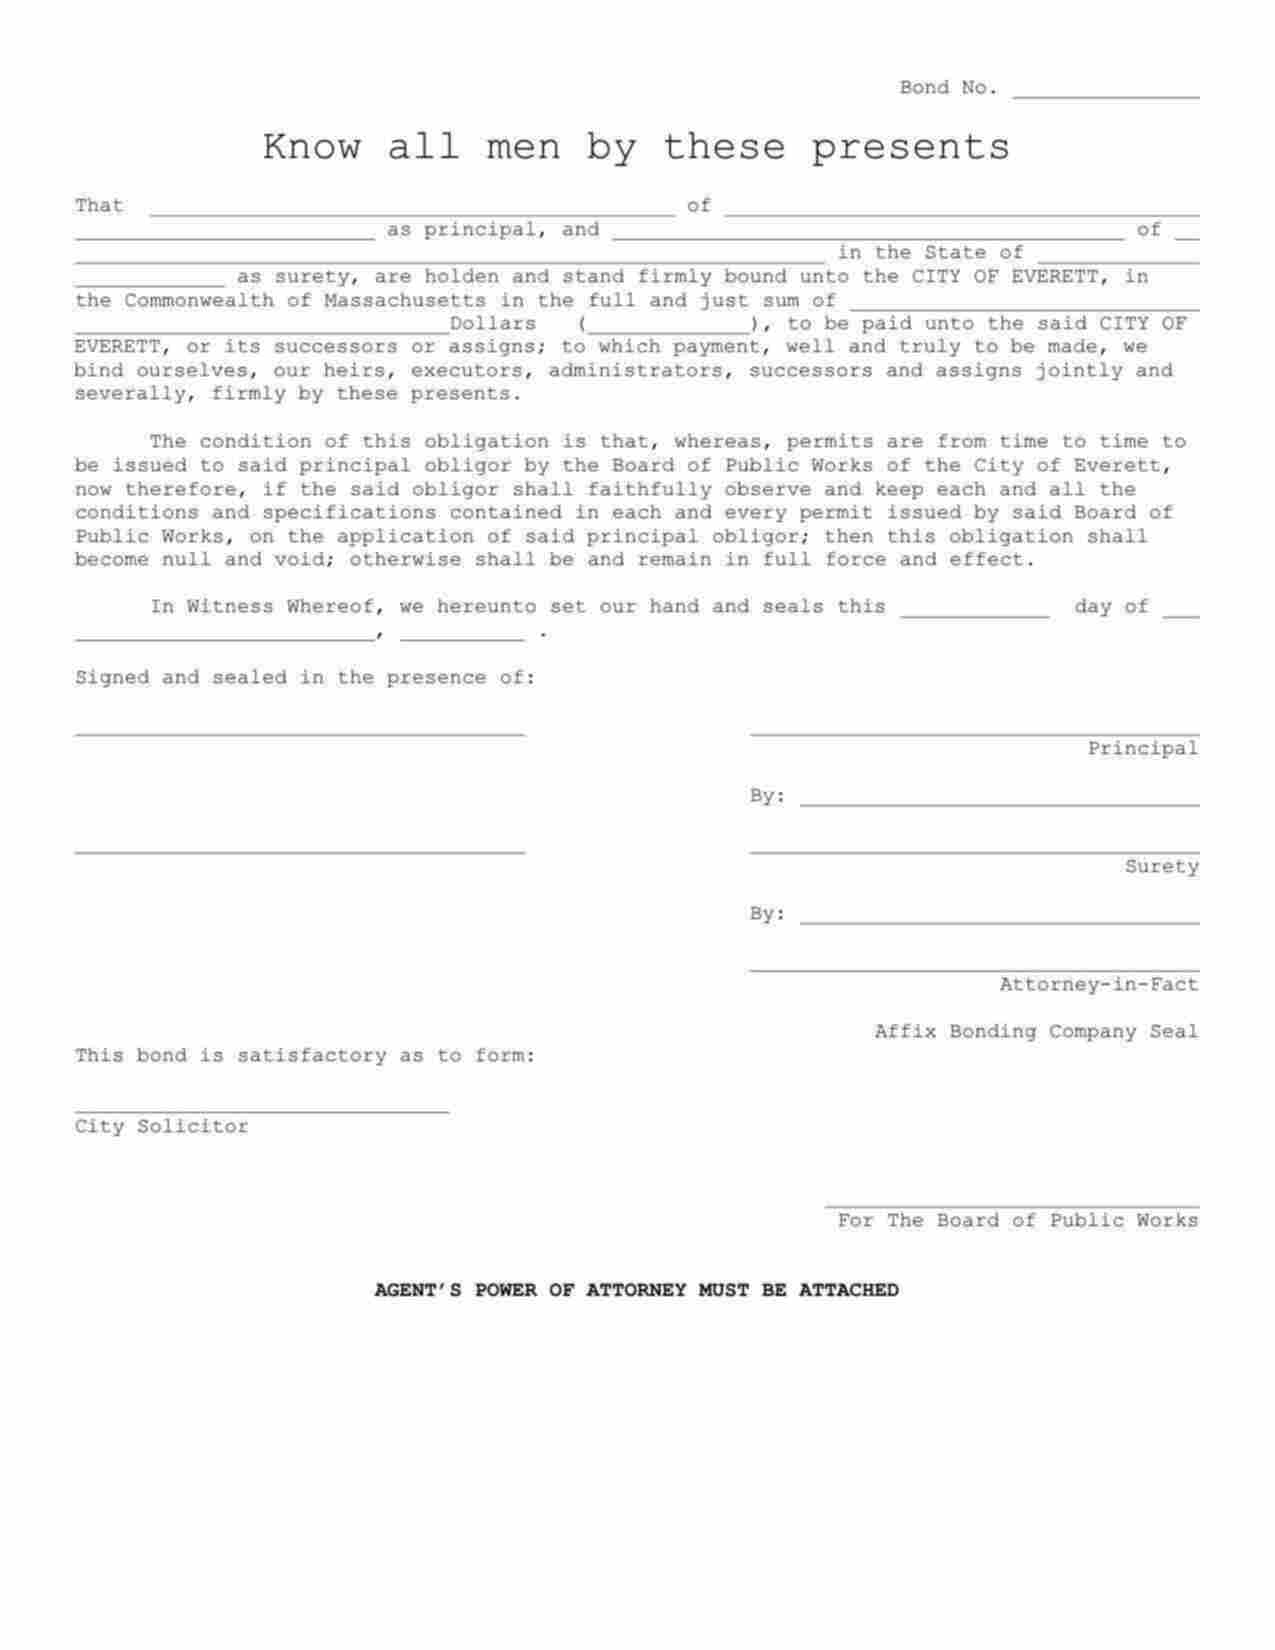 Massachusetts Street Opening Permit Bond Form